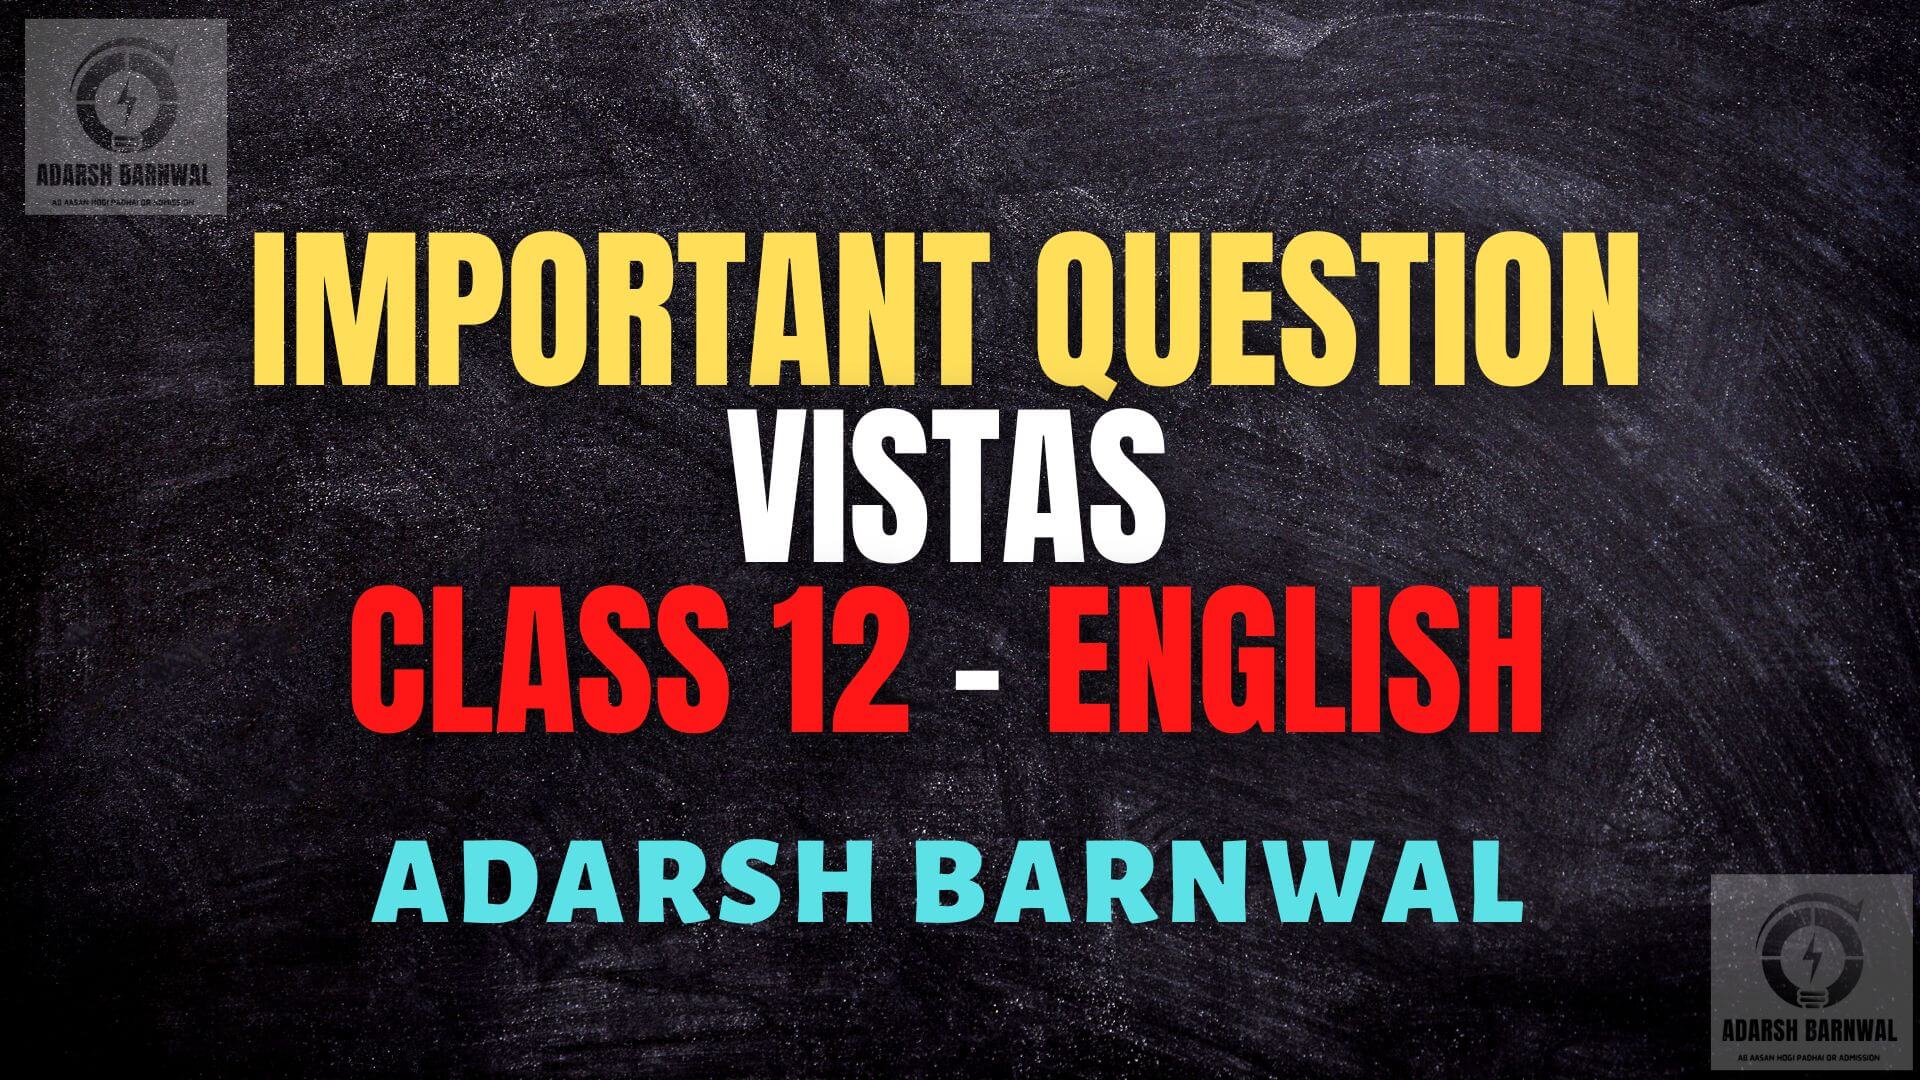 Vistas Class 12 English Important questions Pdf by adarsh barnwal